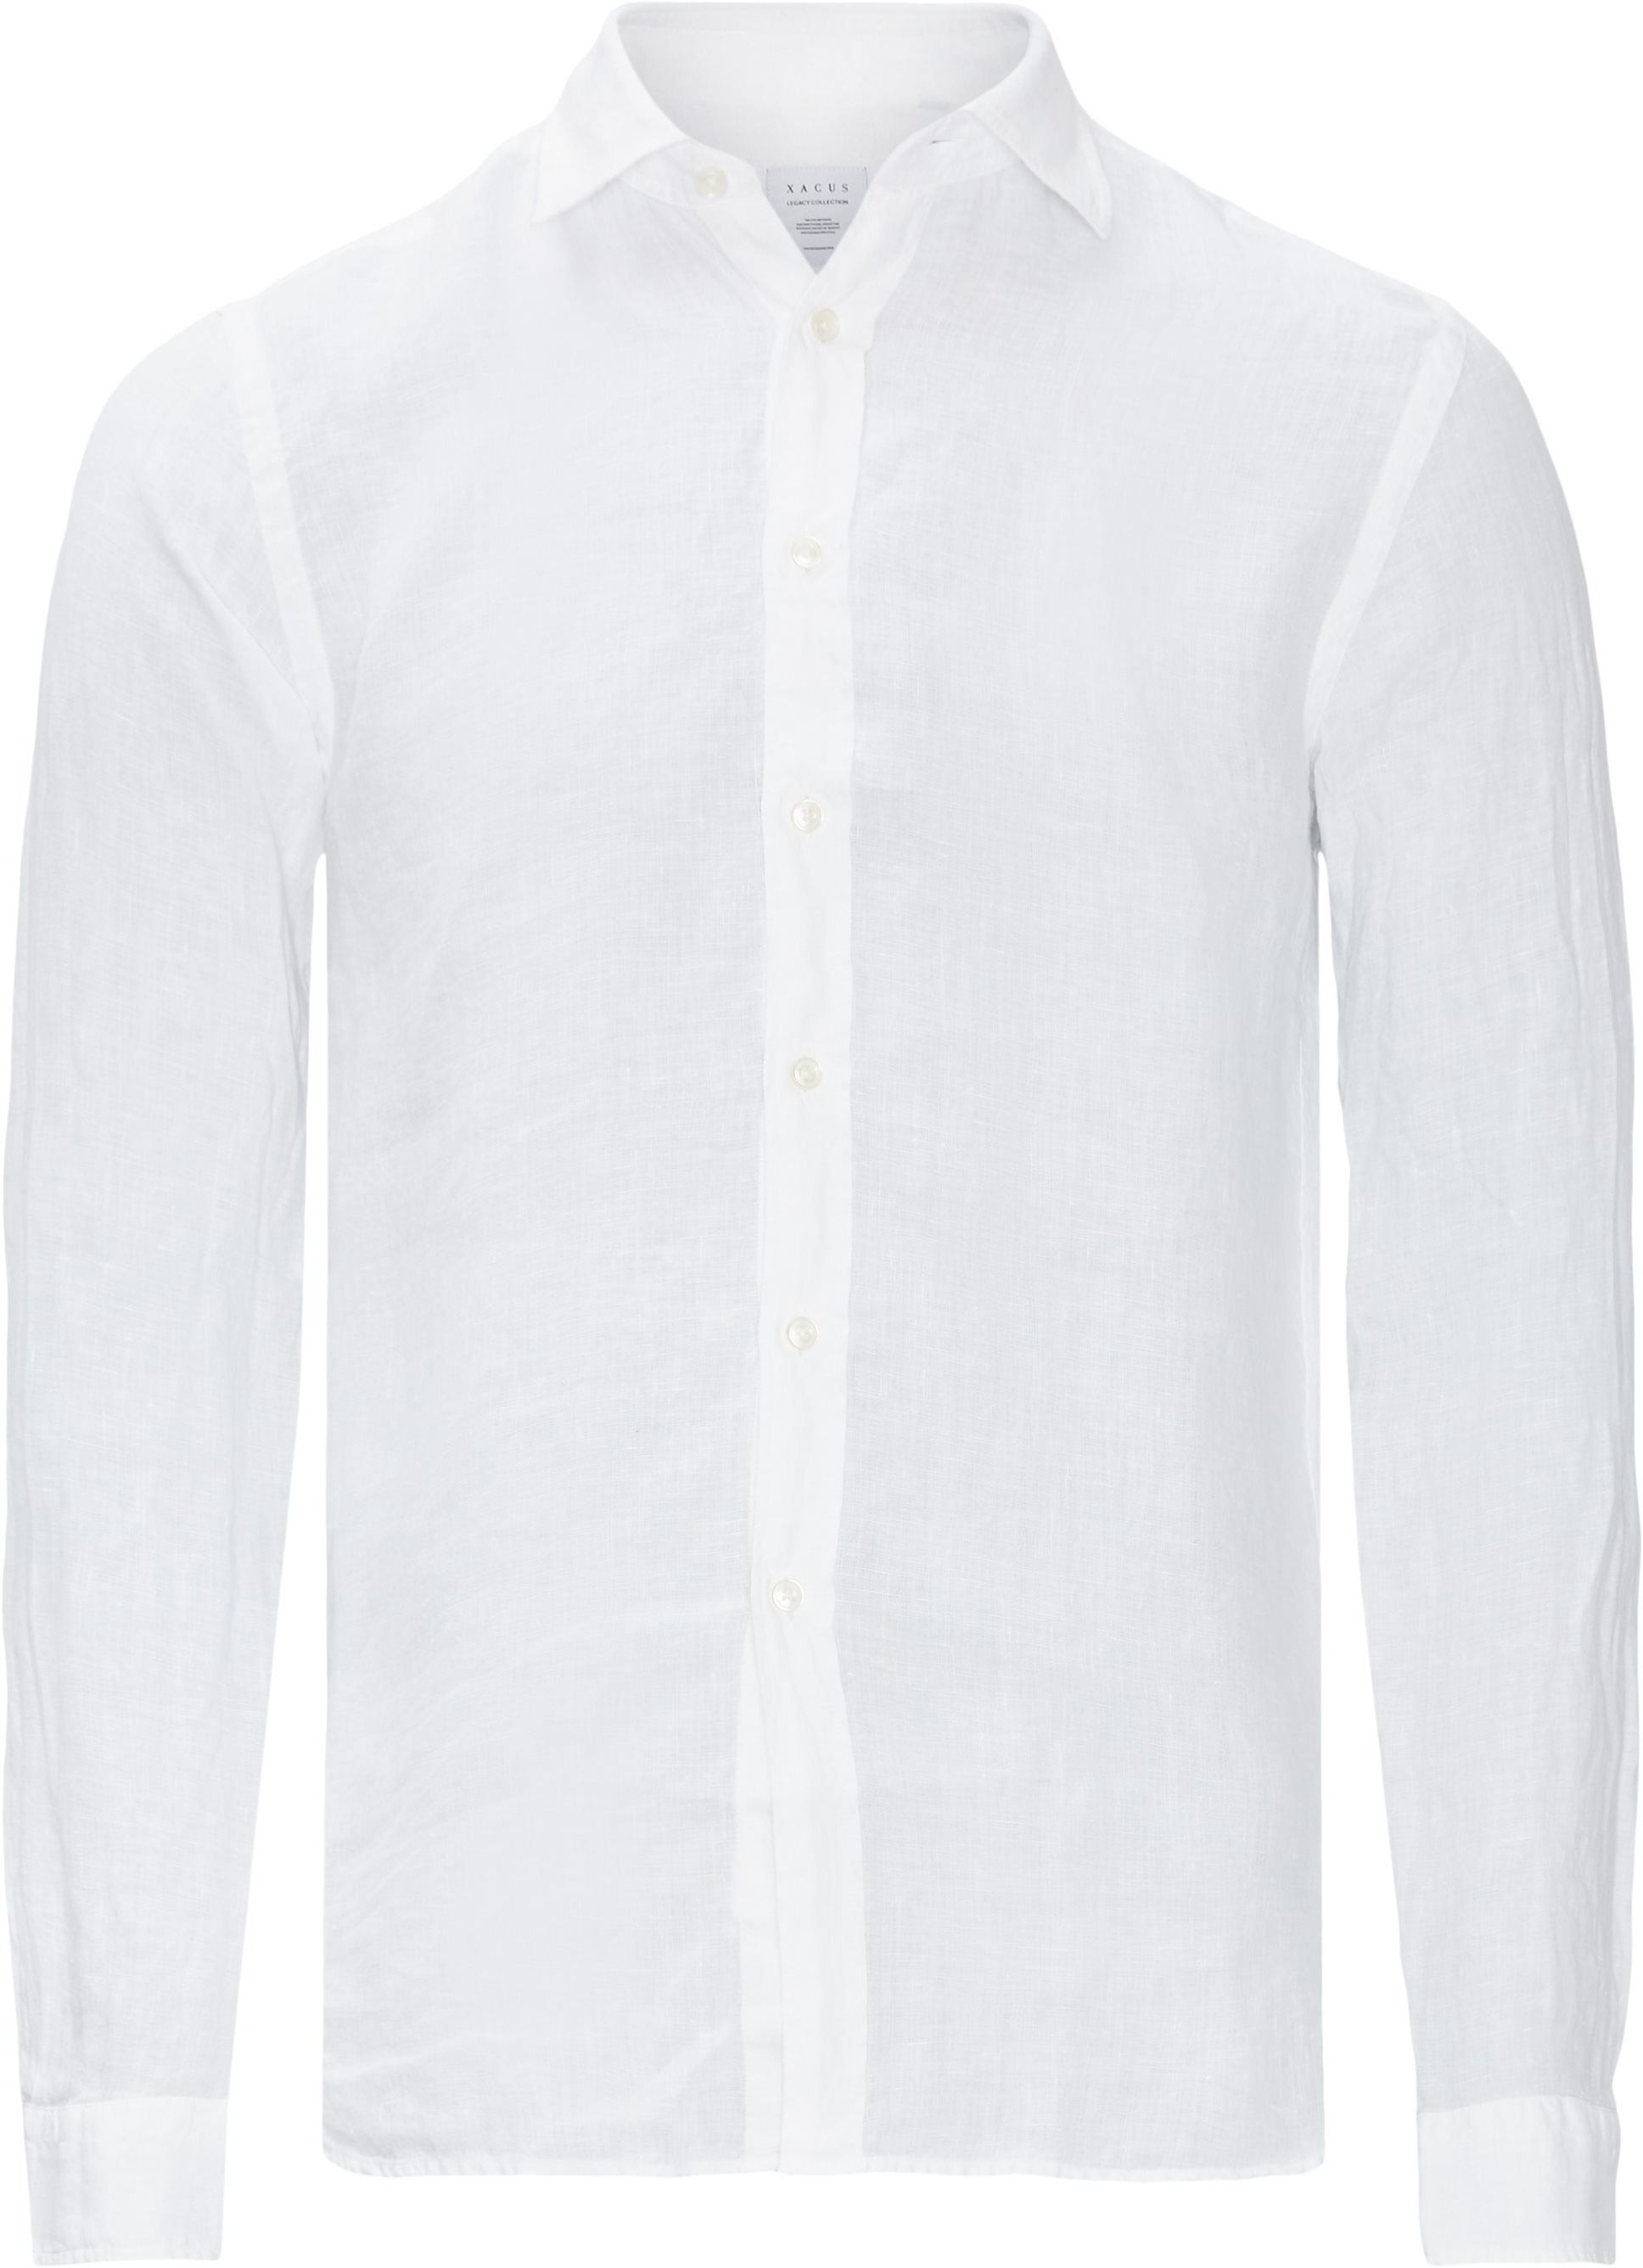 Classic Linen Shirt - Skjorter - Slim fit - Hvid